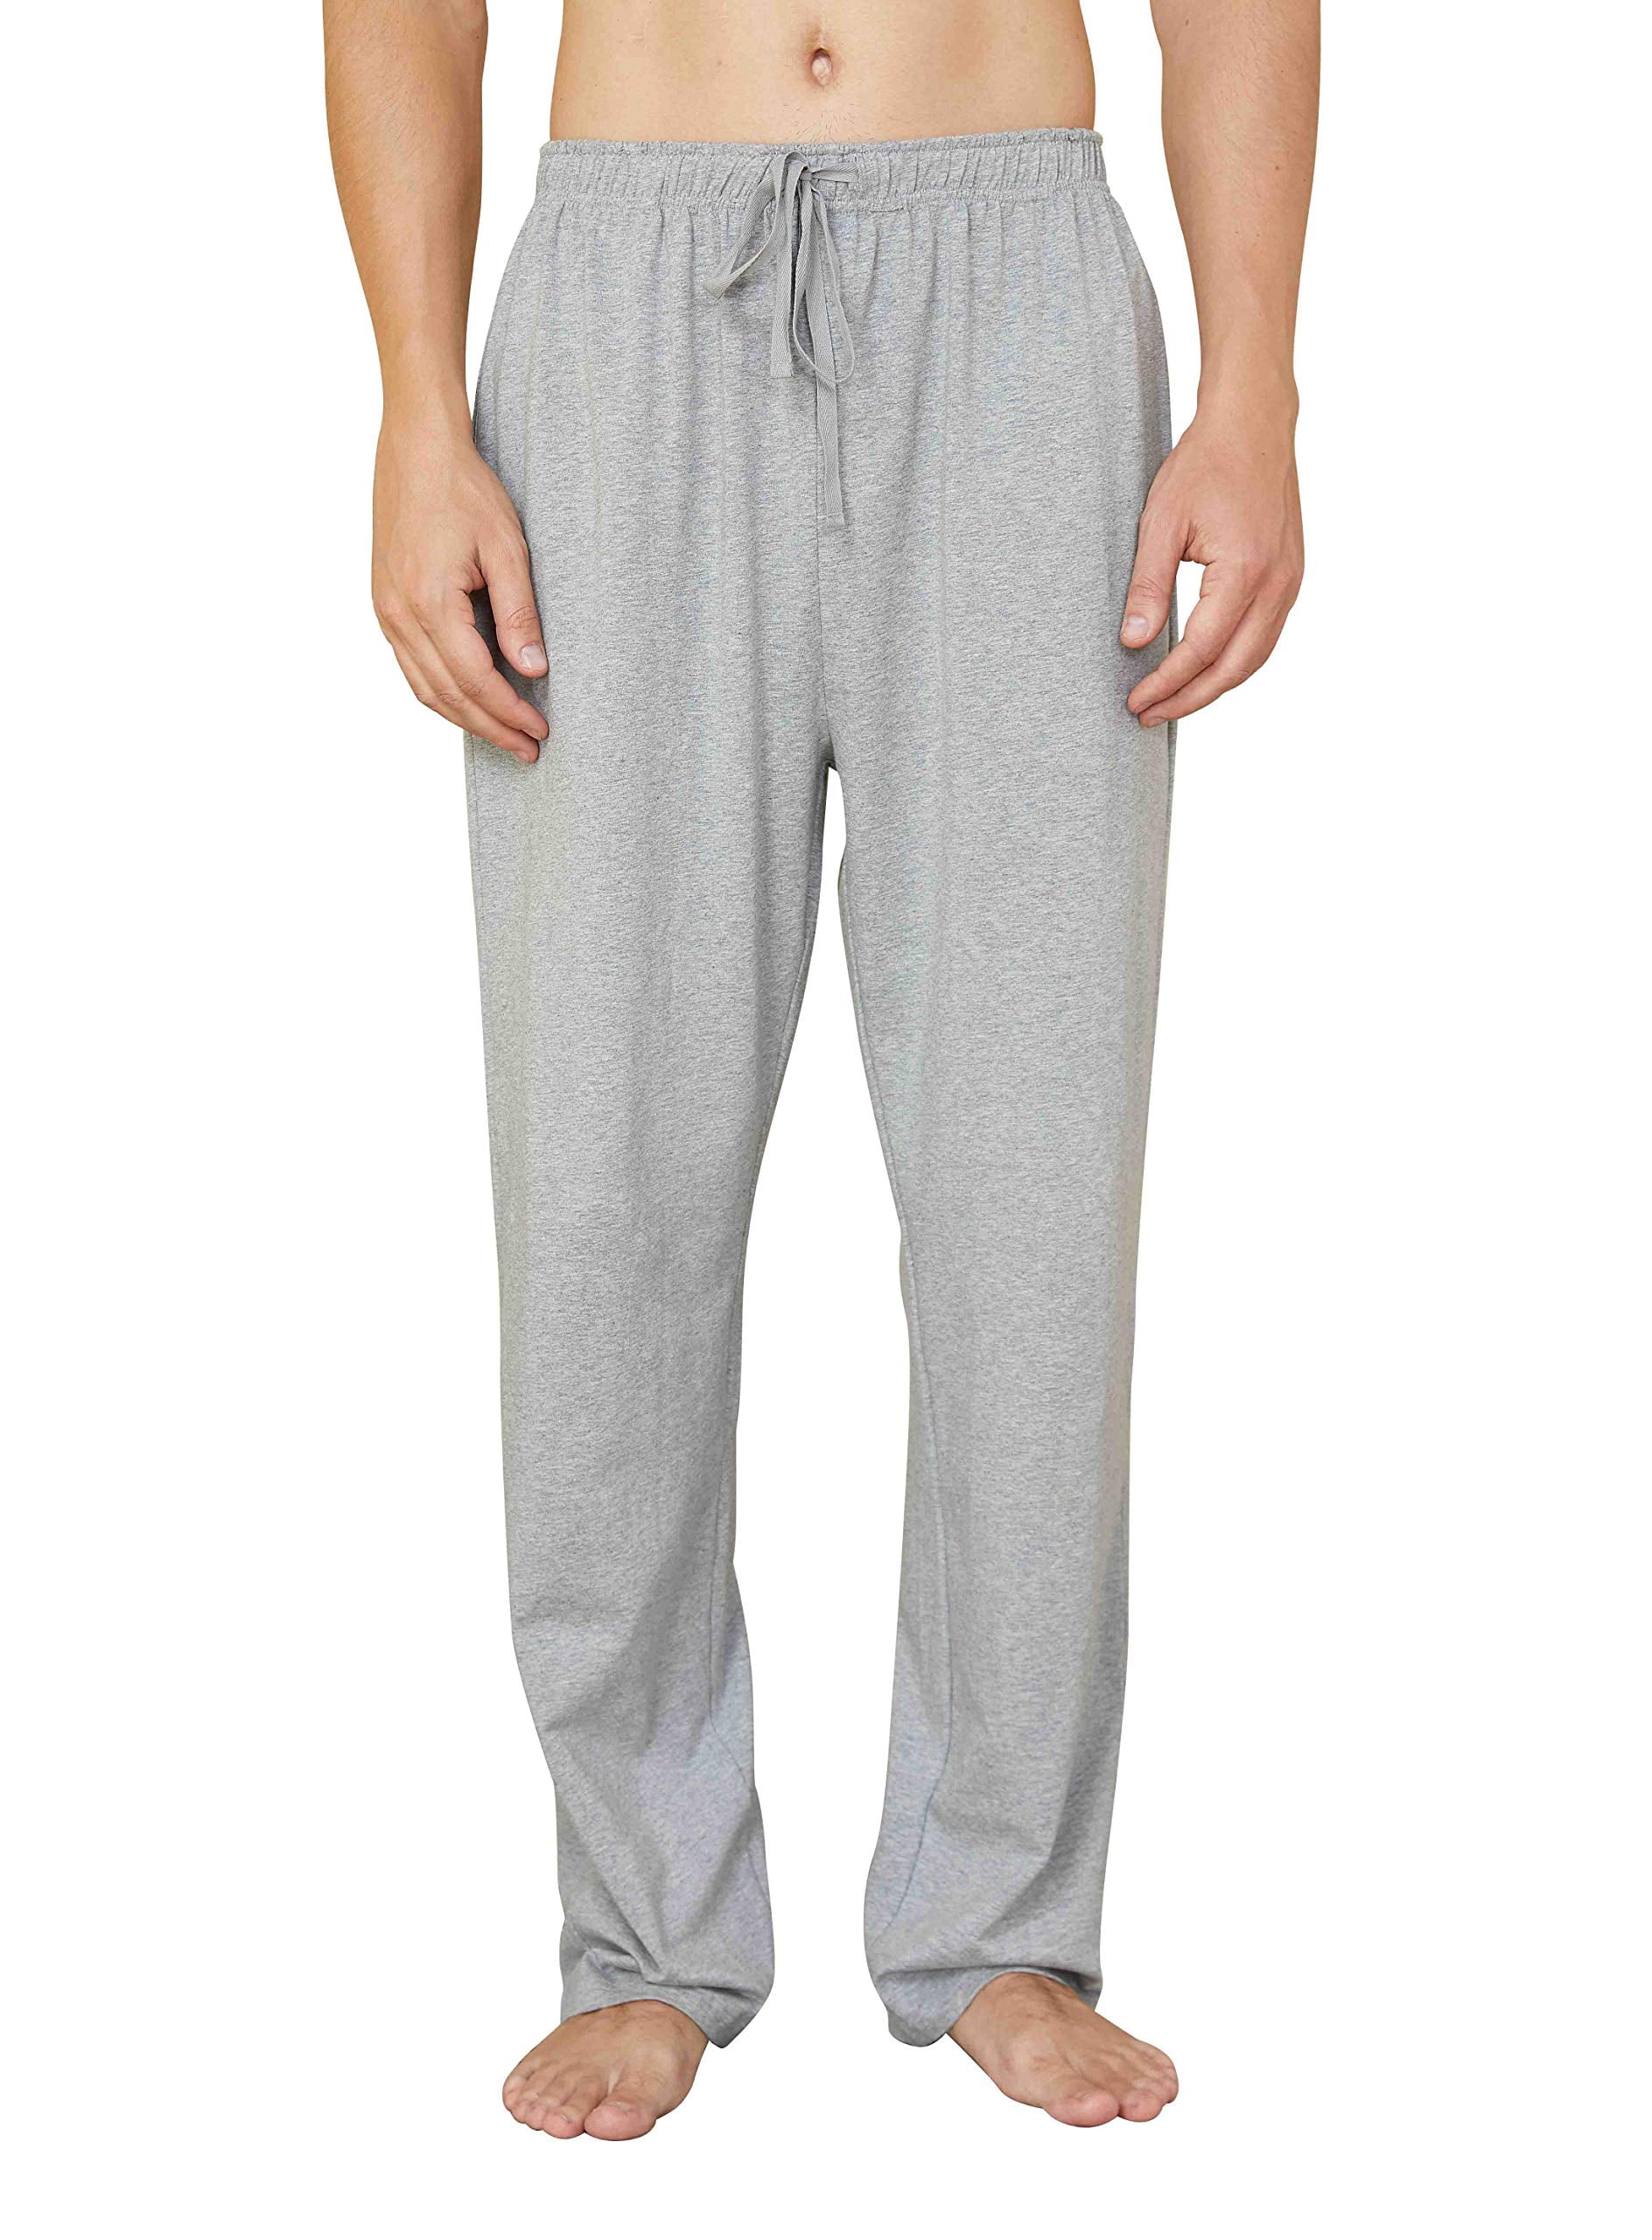 WORW Mens Pajama Pants, Soft Cotton Sleep Lounge Pants - Grey, Medium